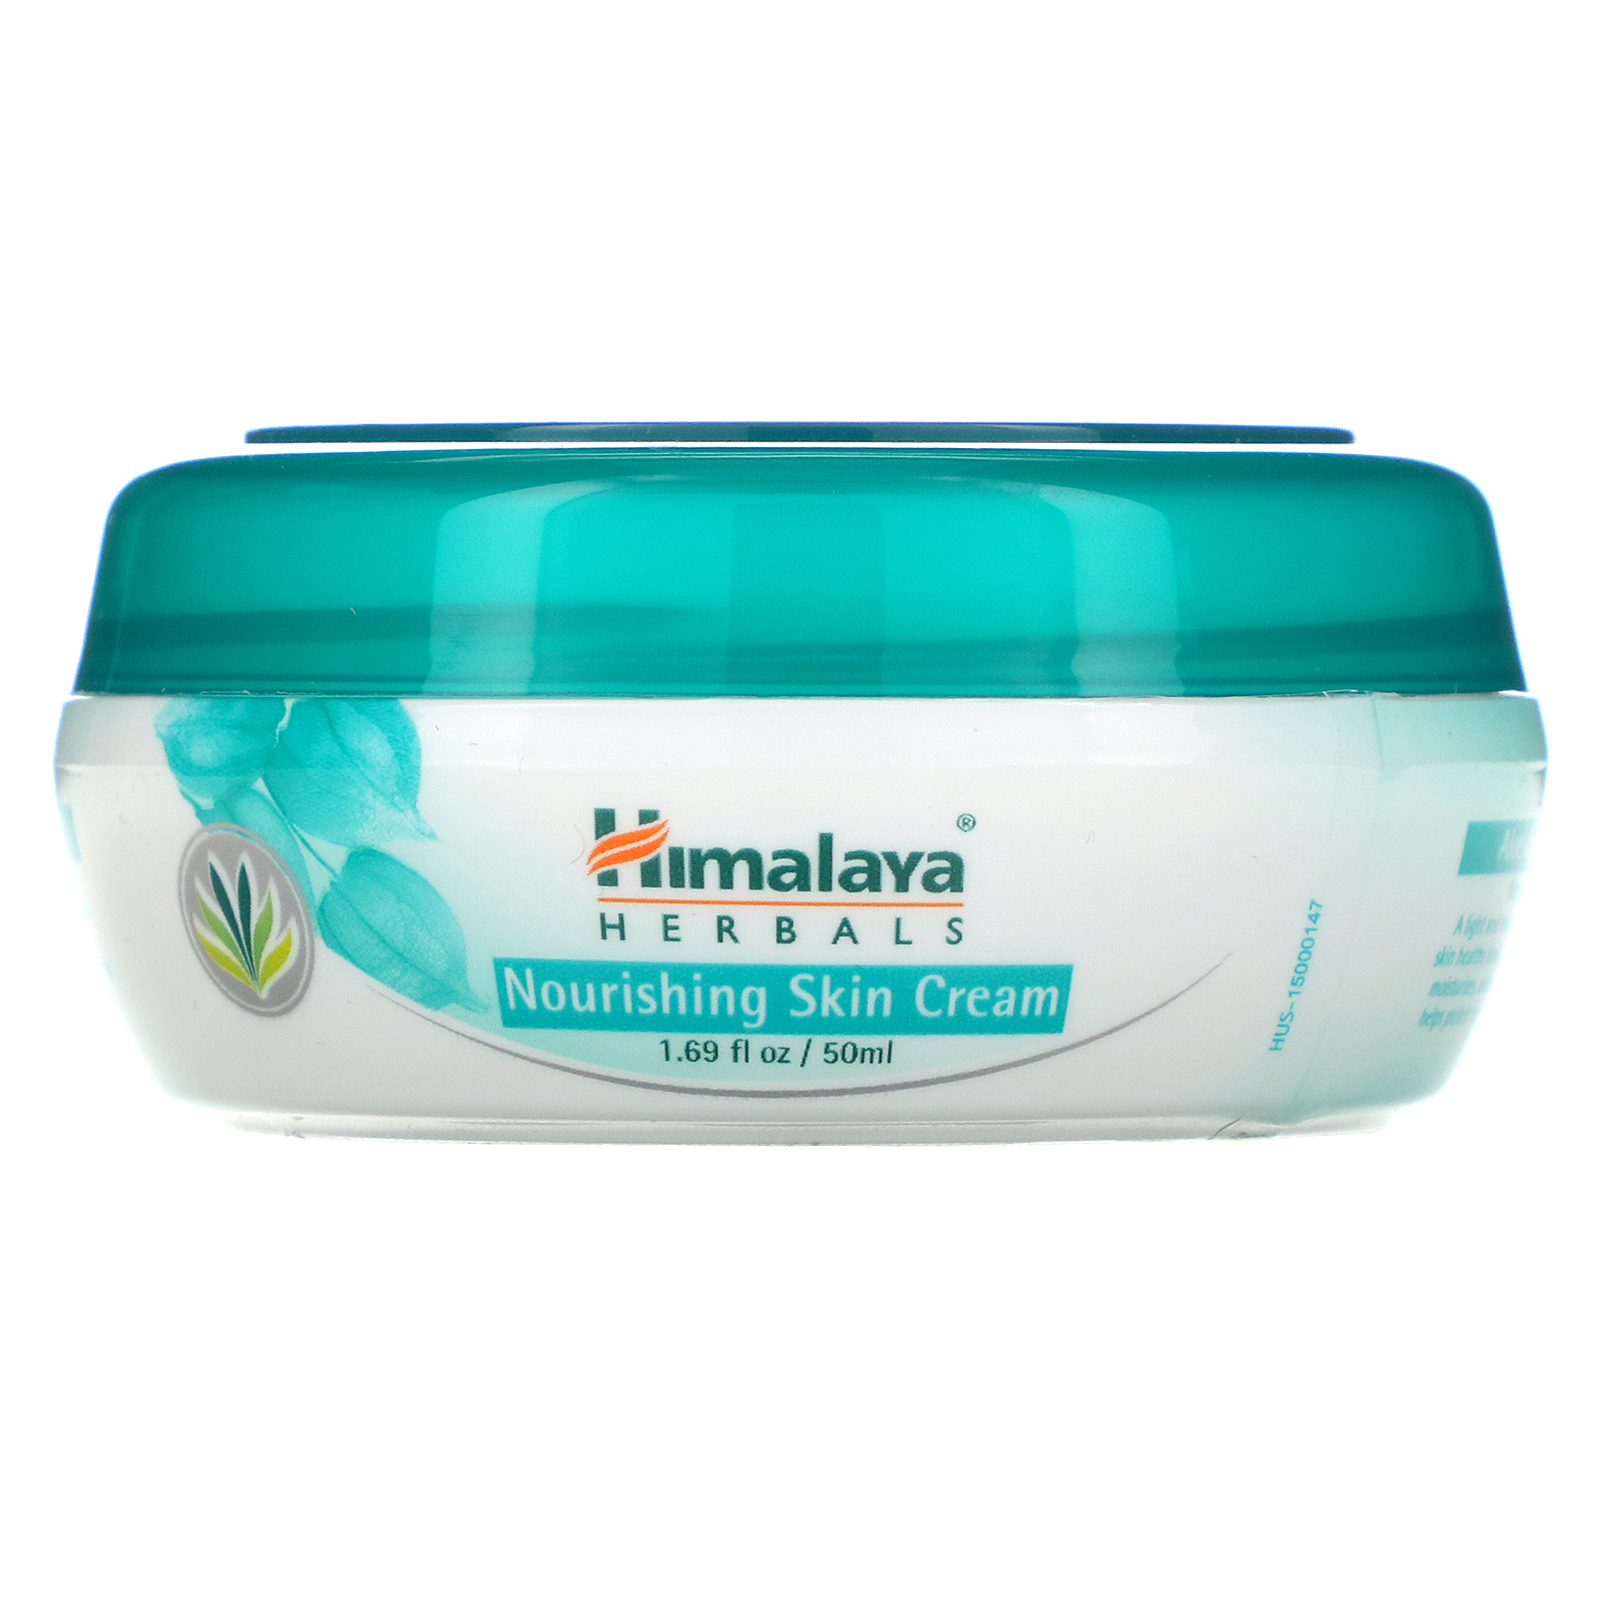 Produse Himalaya Herbals - Review - BeautyControl